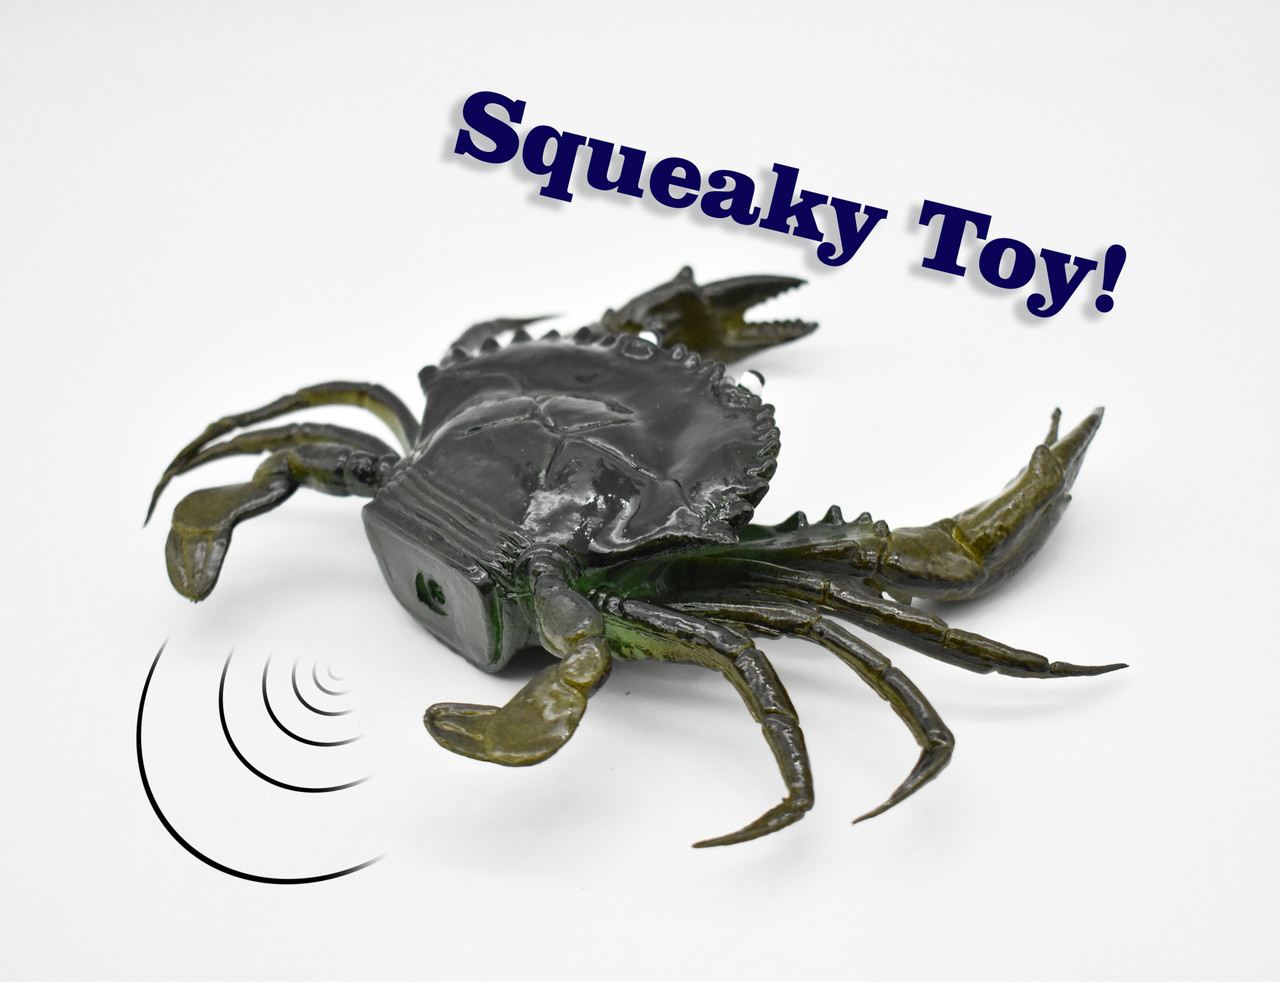 Crab, Mud Crab, With Squeak, Squeakee, Rubber, Crustacean Design, Educational, Hand Painted, Figure, Lifelike, Model, Replica, Gift       7"      F1765 B107